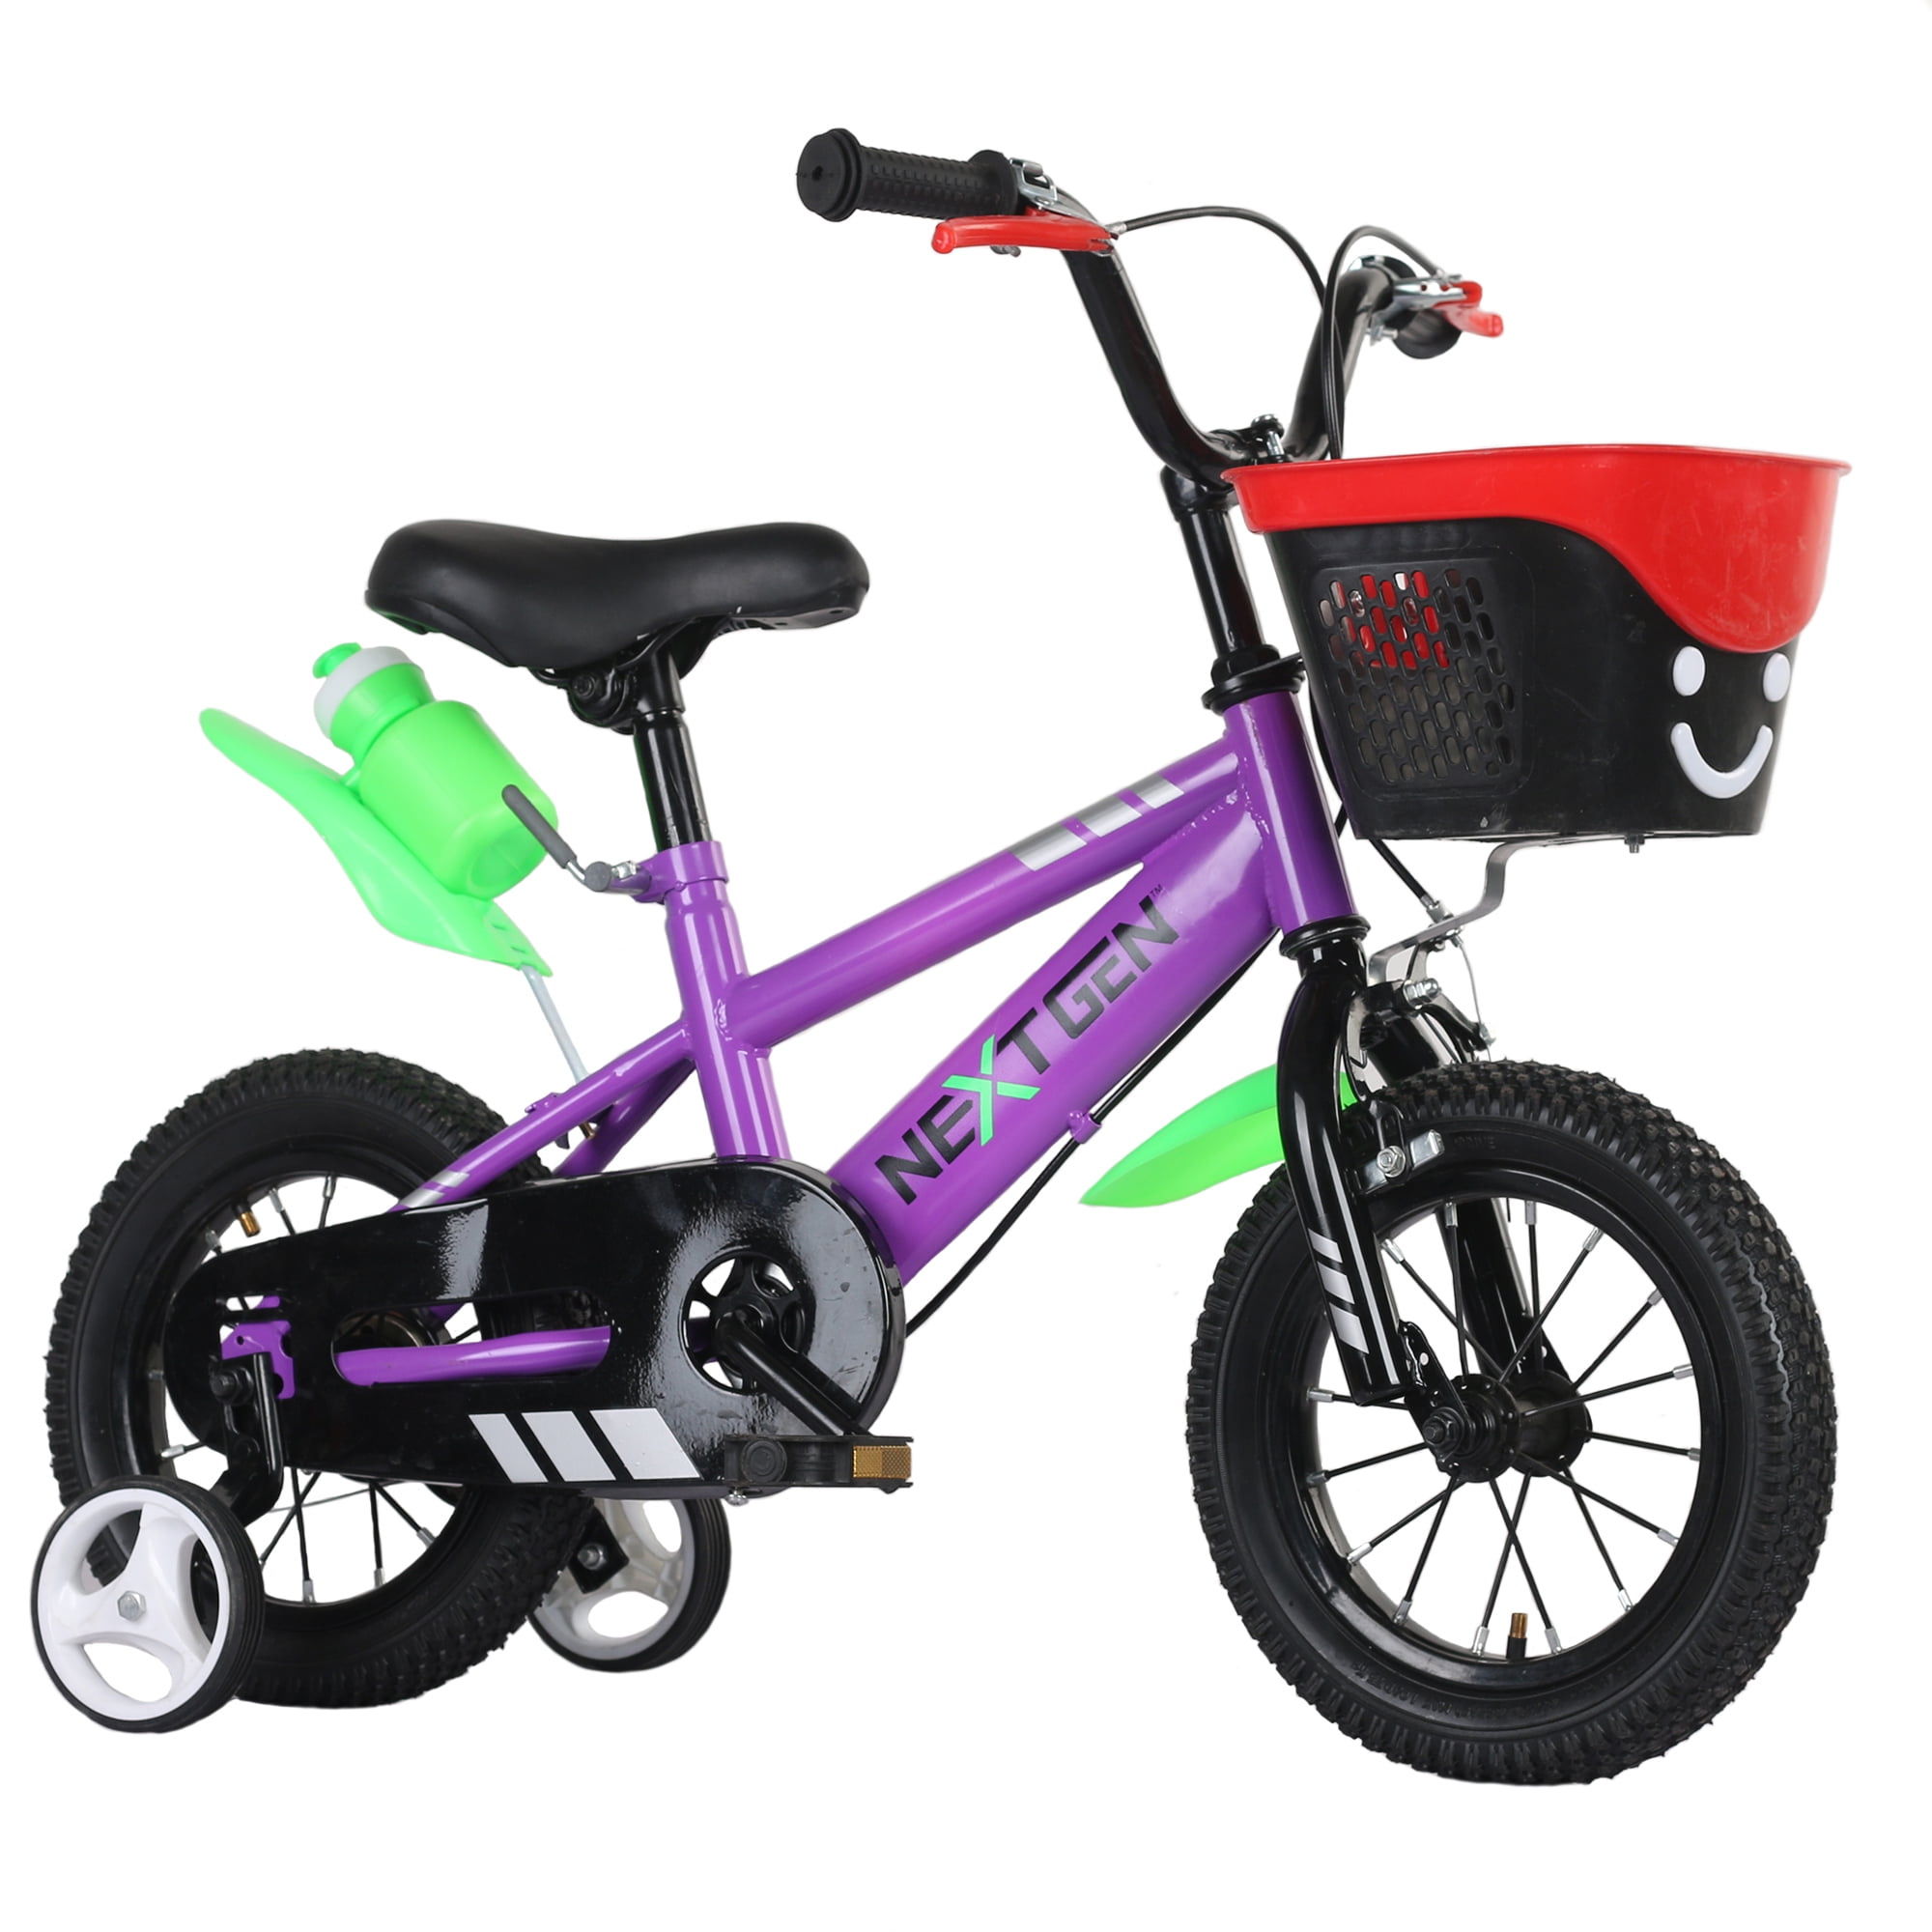 Ridgeyard 12" Boys Girls Kids Bike Child Bicycle Age 1-5 Years W/ Training Wheel 